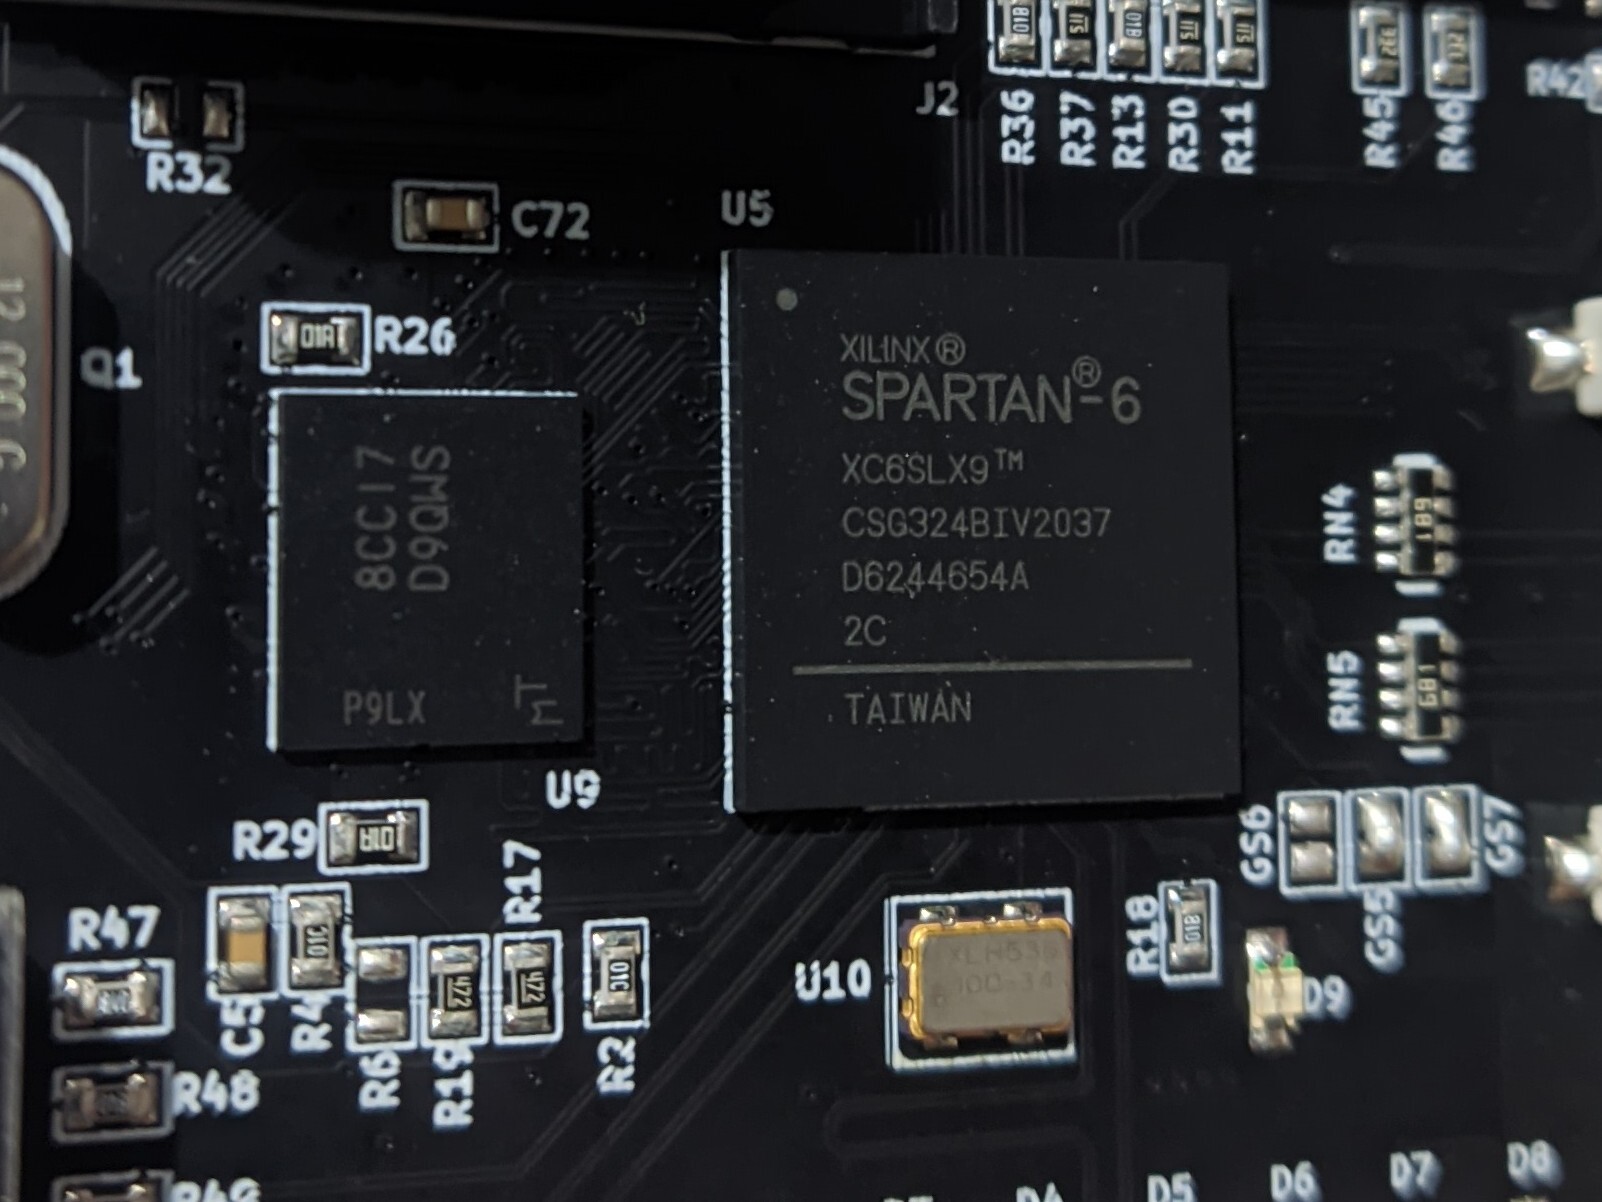 Spartan 6 FPGA chip